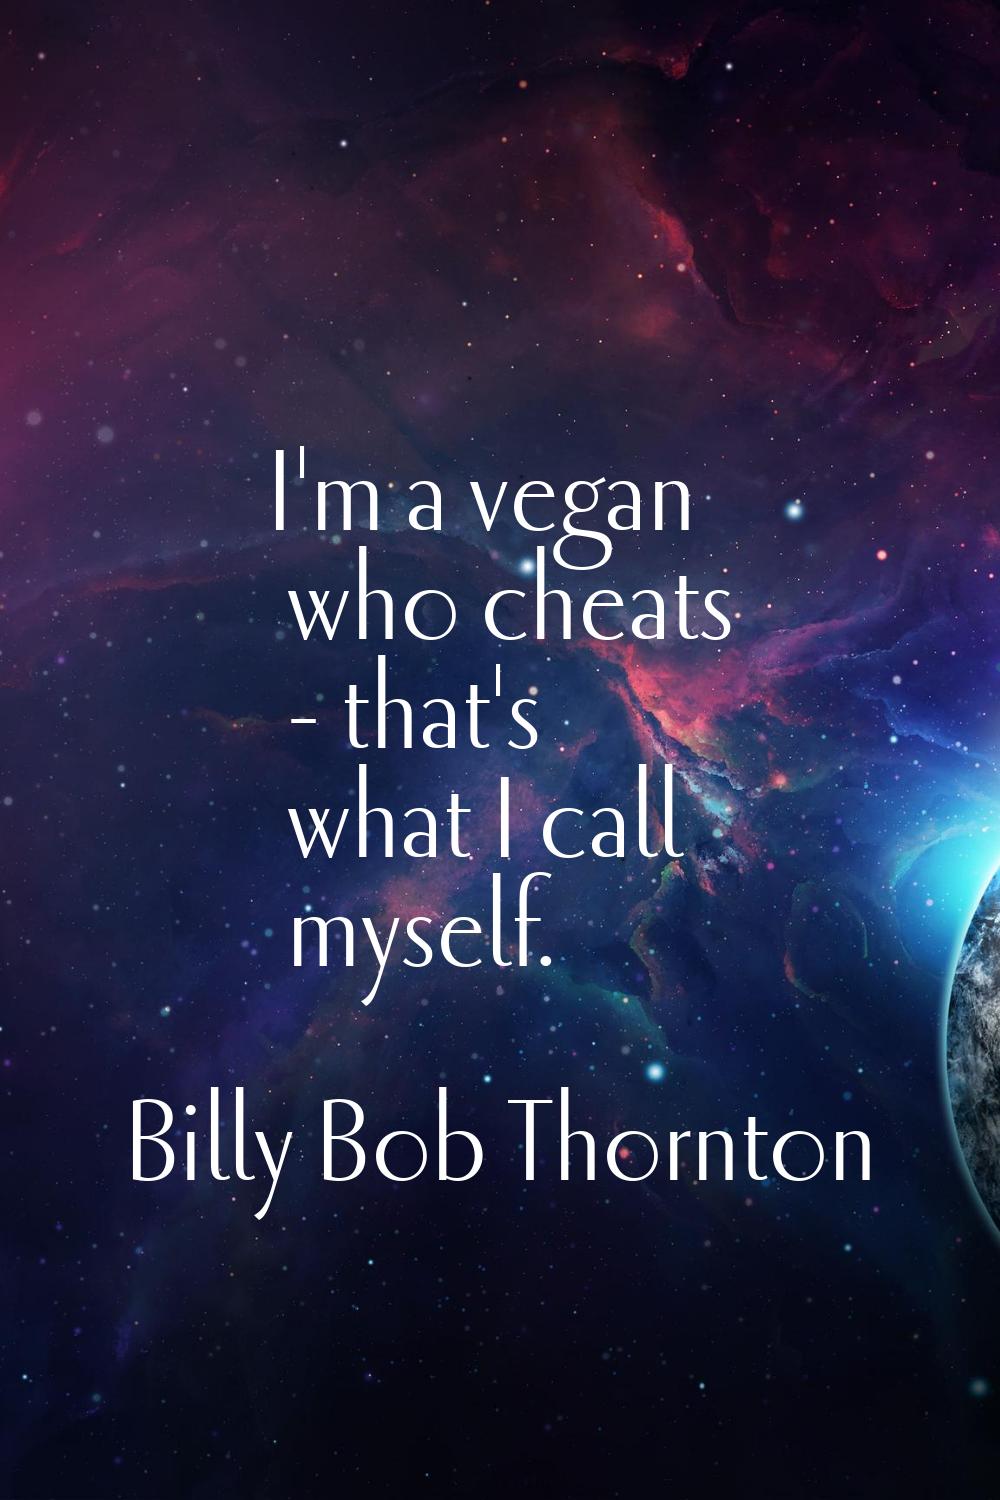 I'm a vegan who cheats - that's what I call myself.